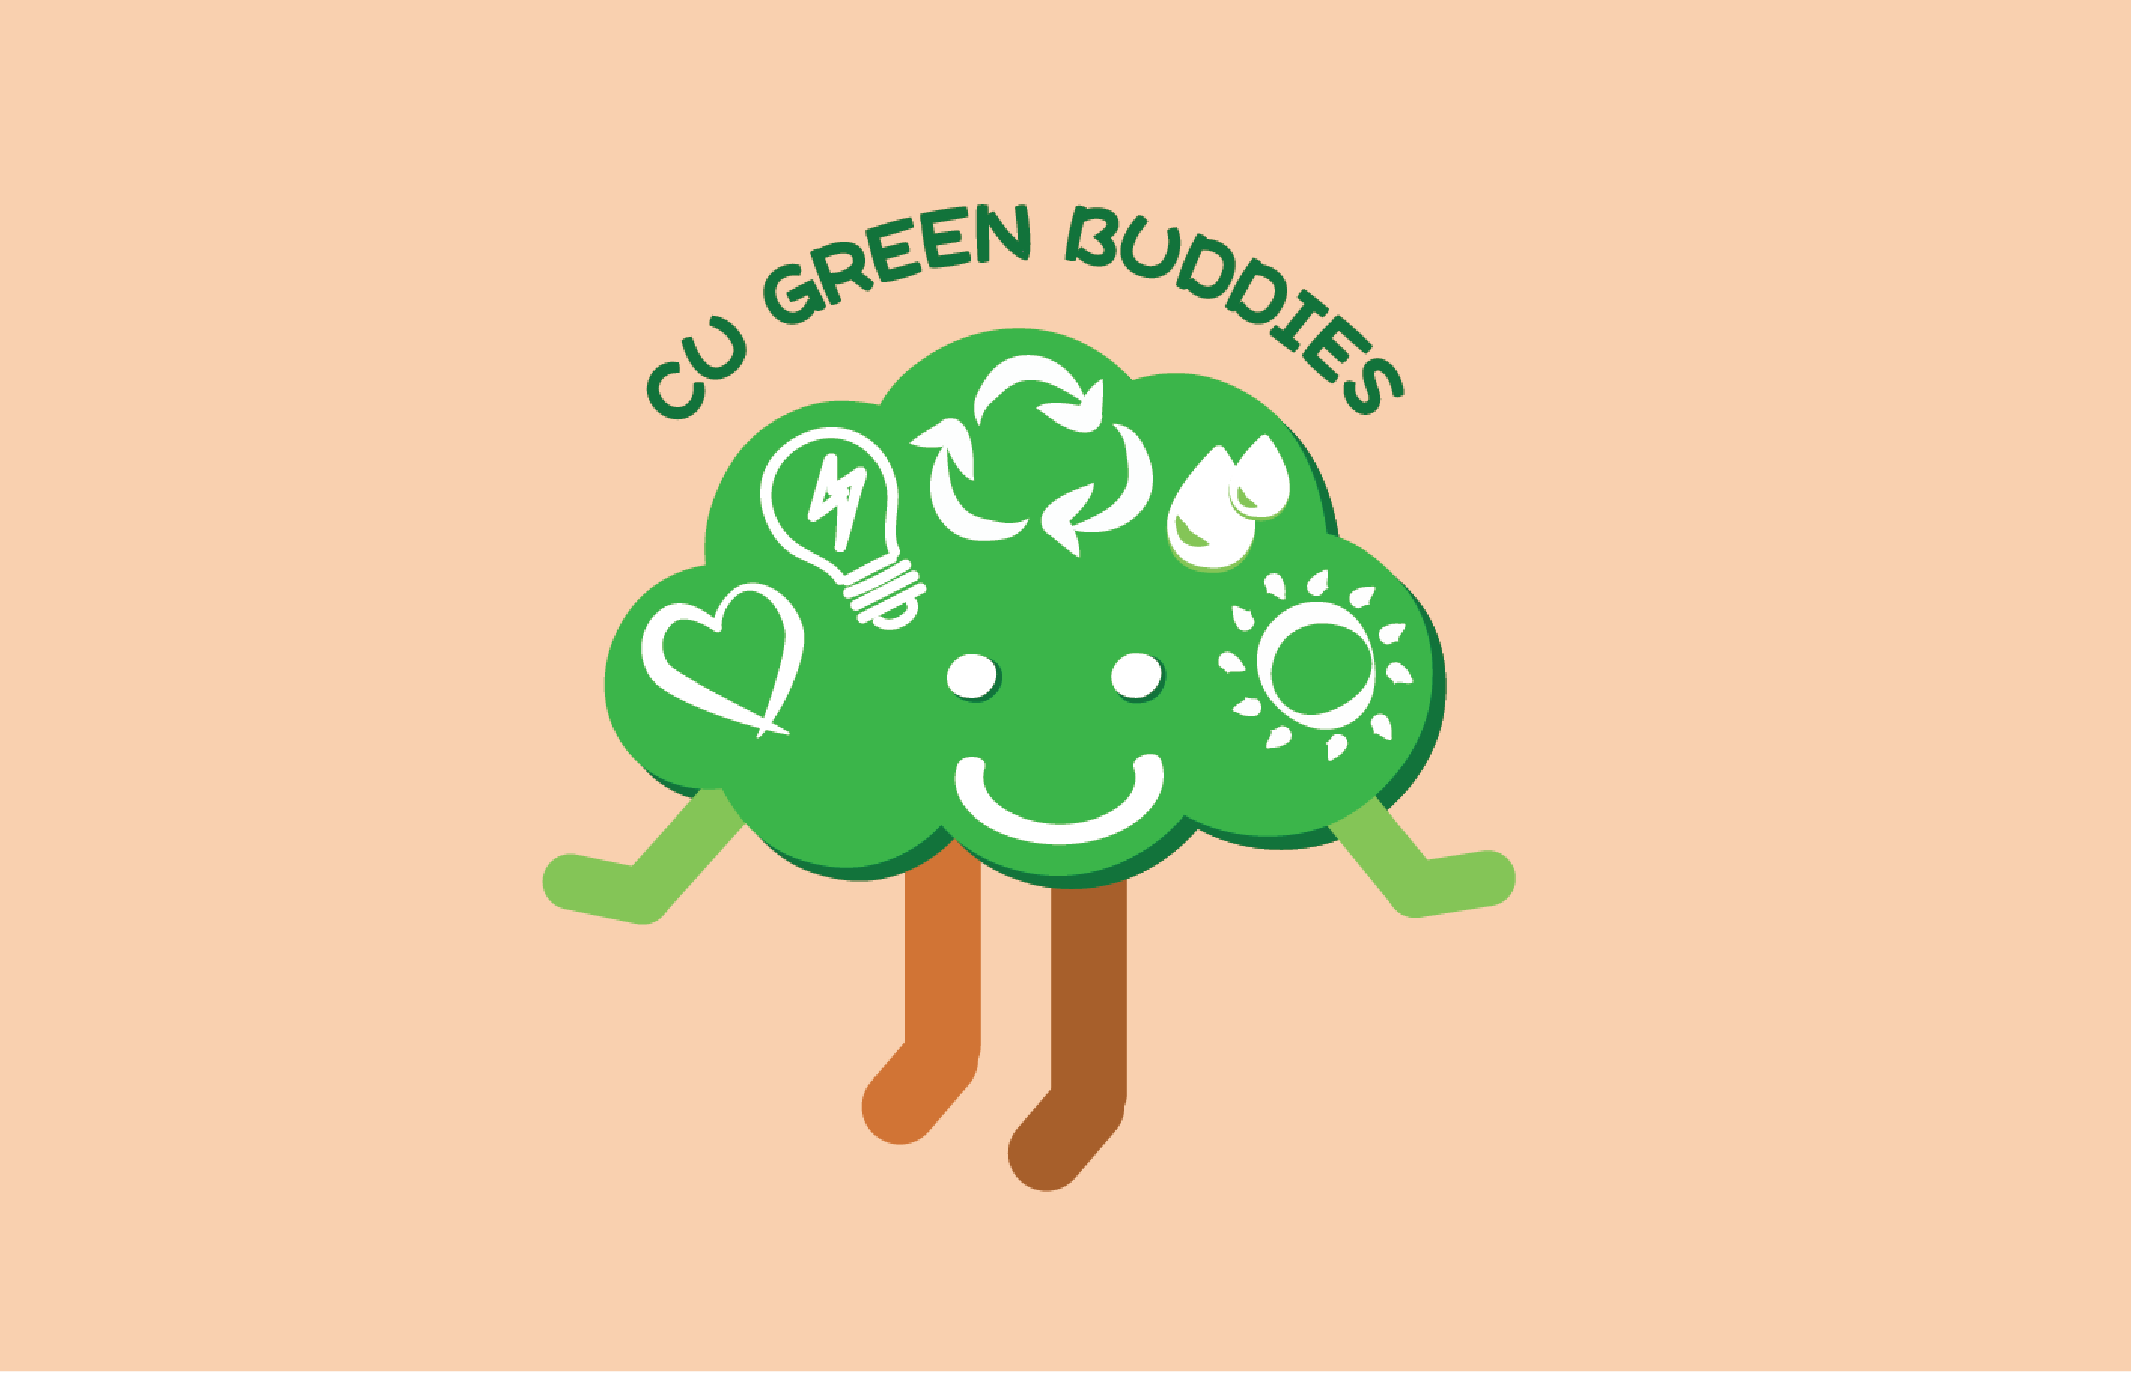 CU Green Buddies